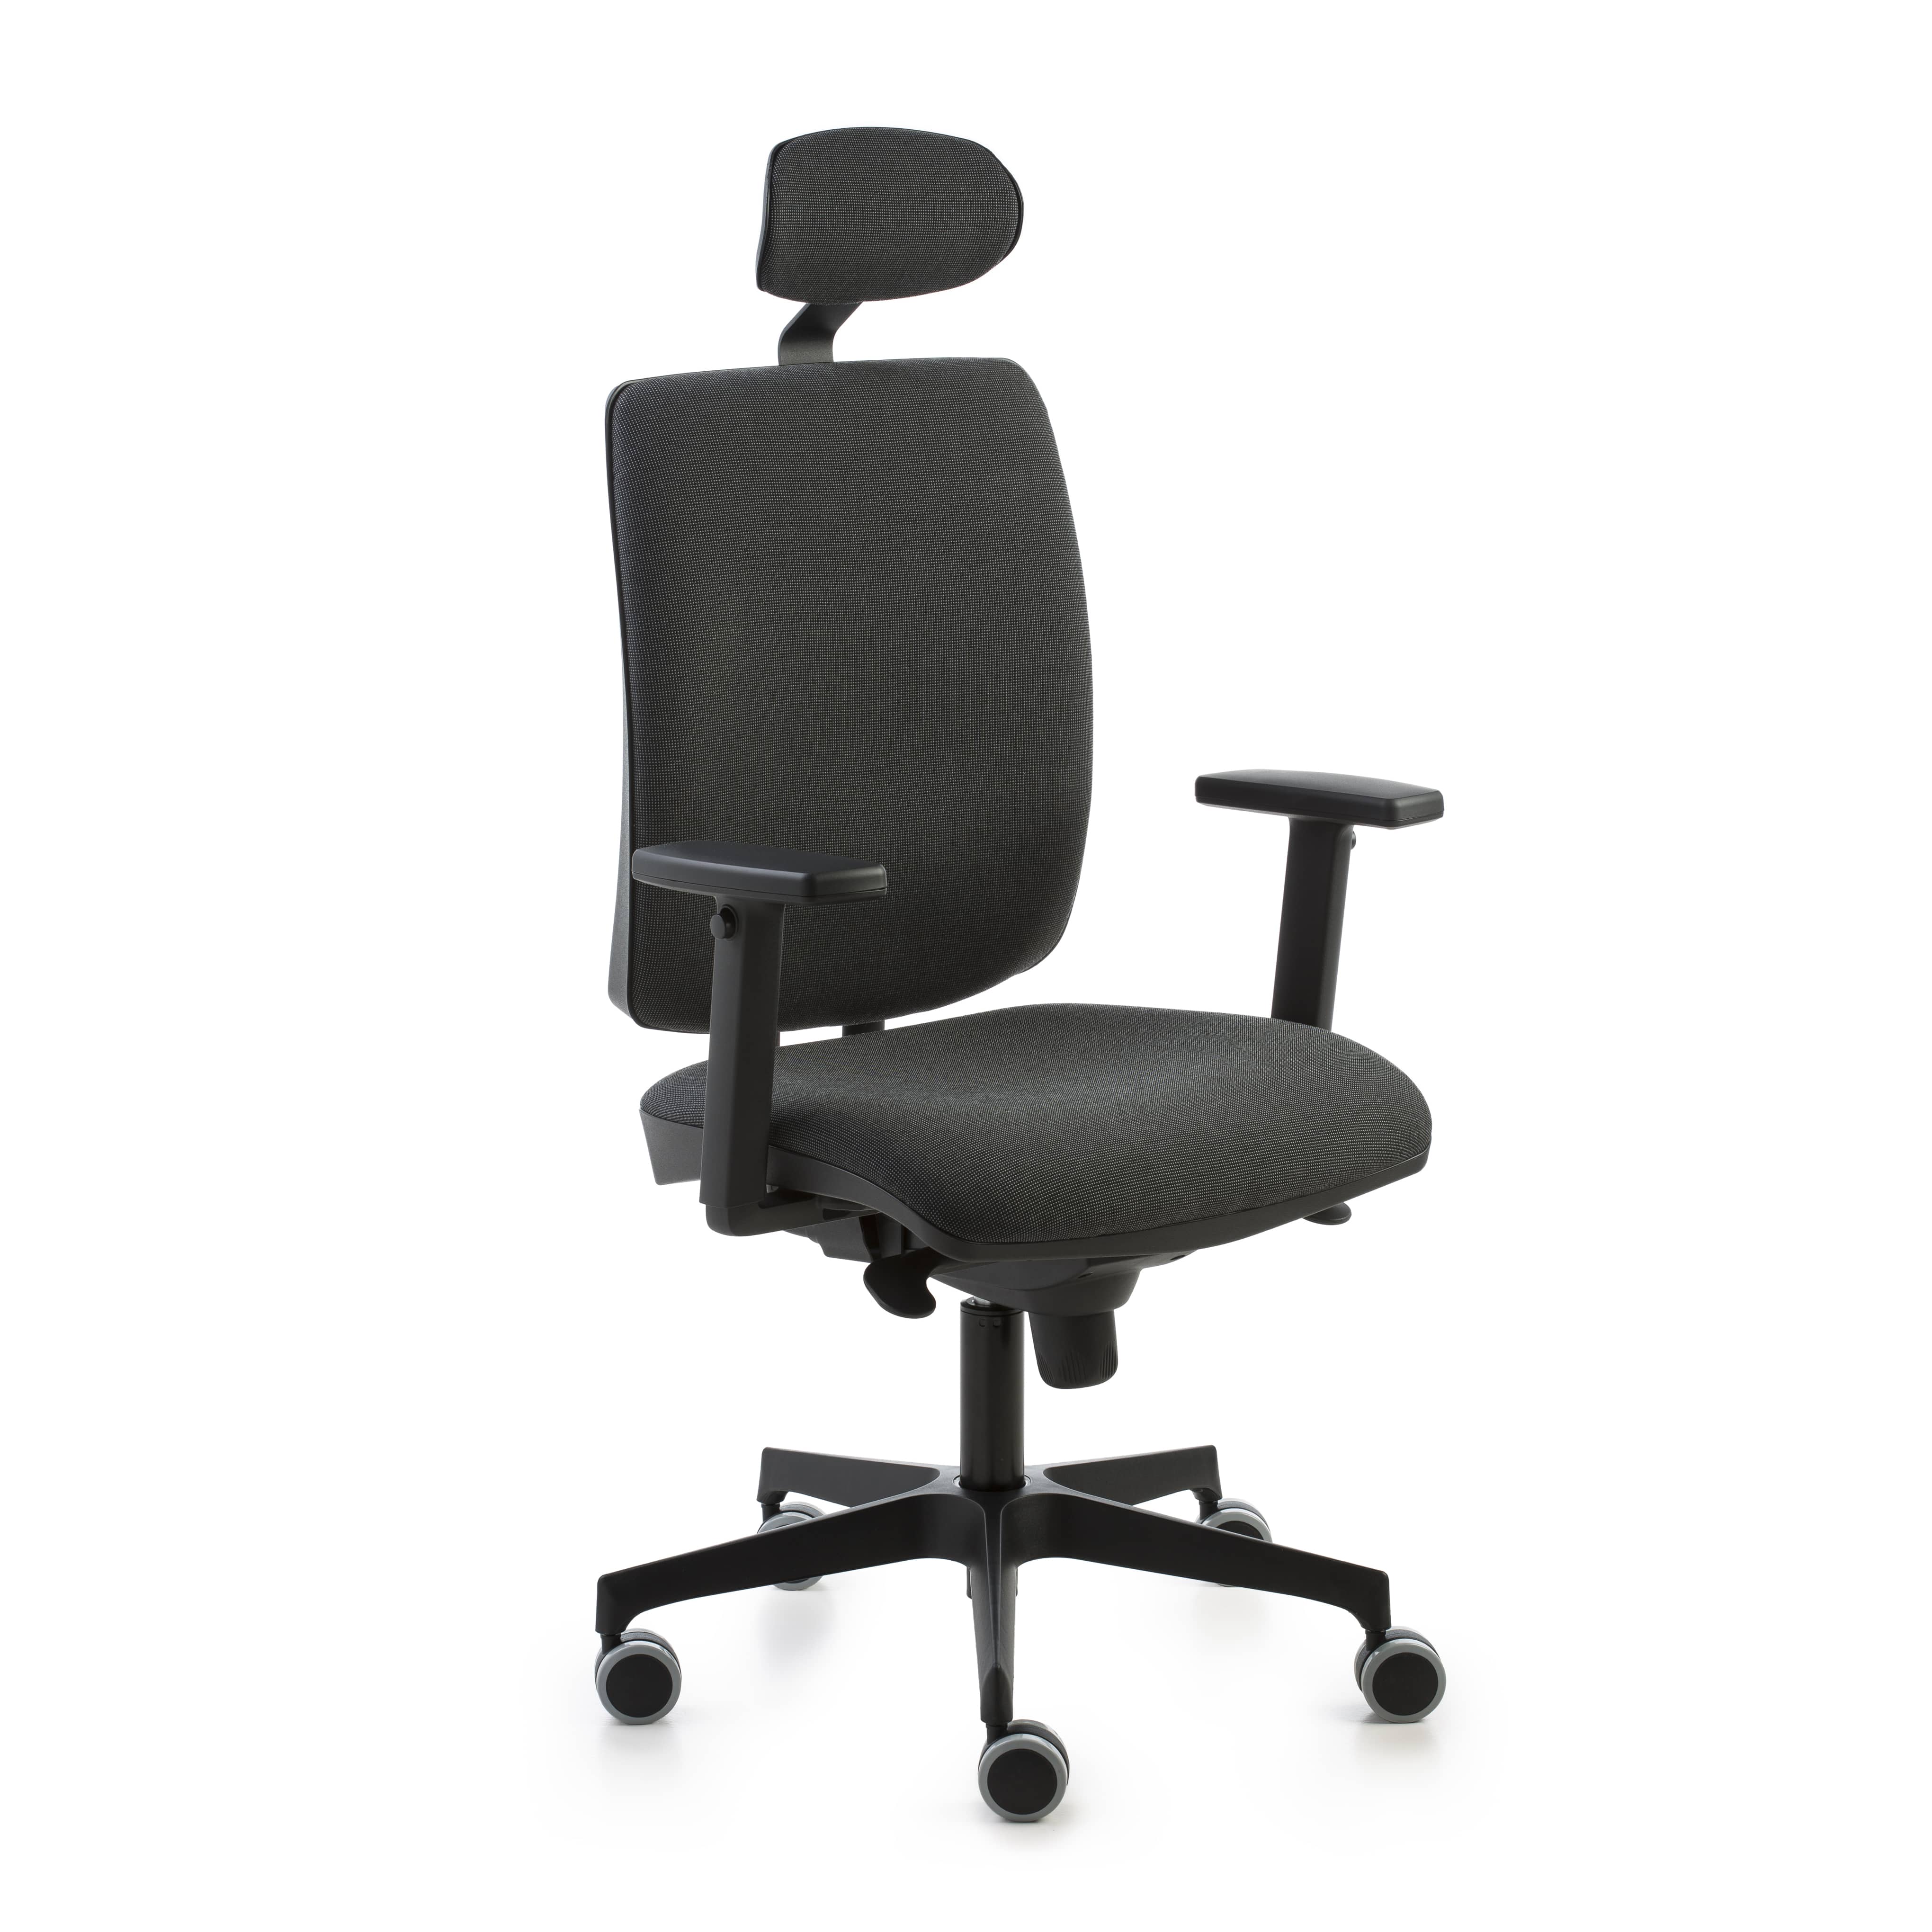 sillas-oficina-General-muebles-paco-caballero-454-5caf5d95c70da